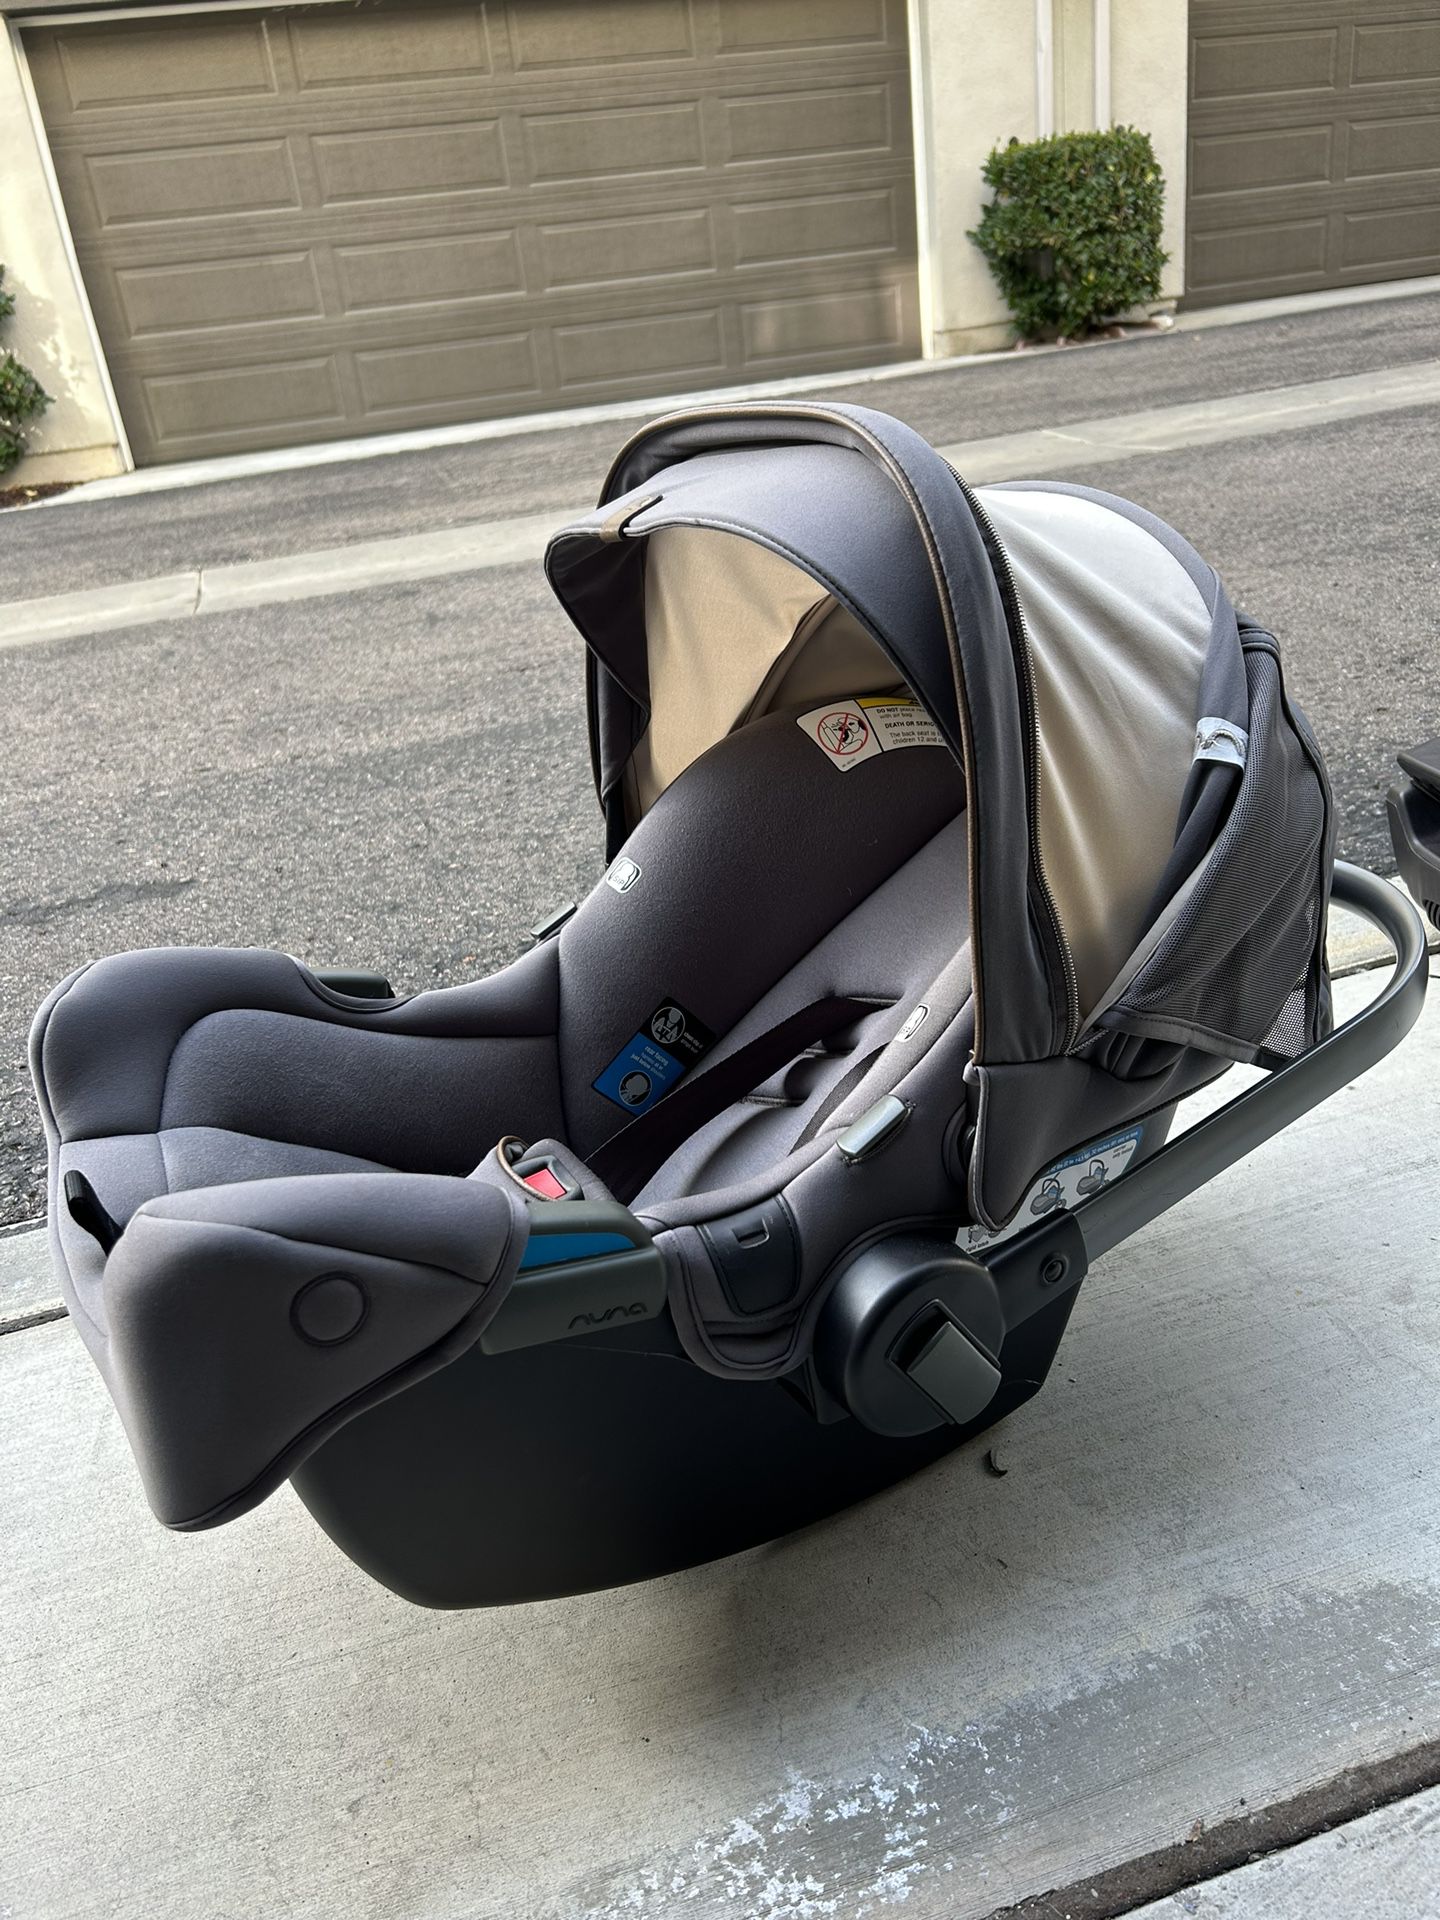 Nuna Pipa Rx Infant Car Seat With Base $150